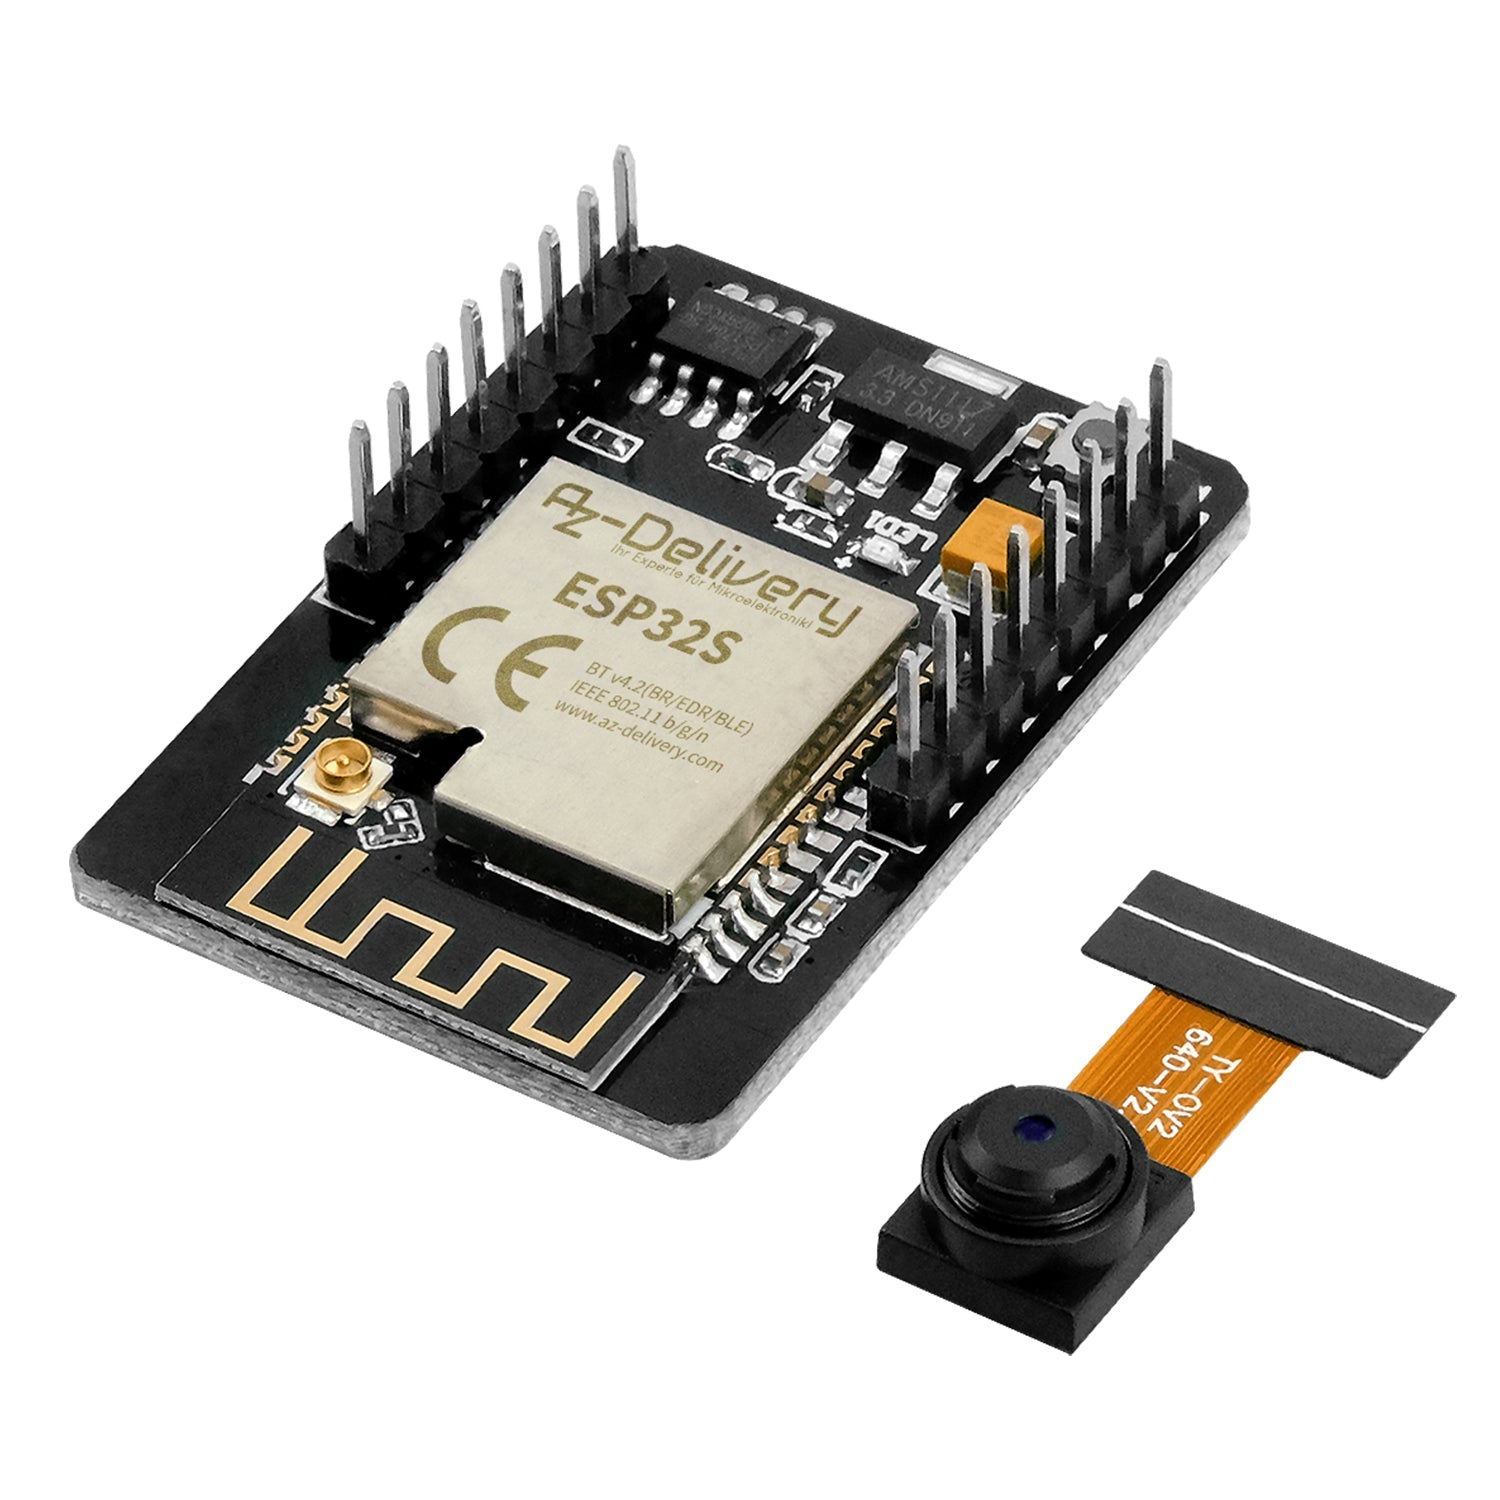 ESP32-Cam camera module (ESP32 Wifi/Bluetooth module including camera)  compatible with Arduino